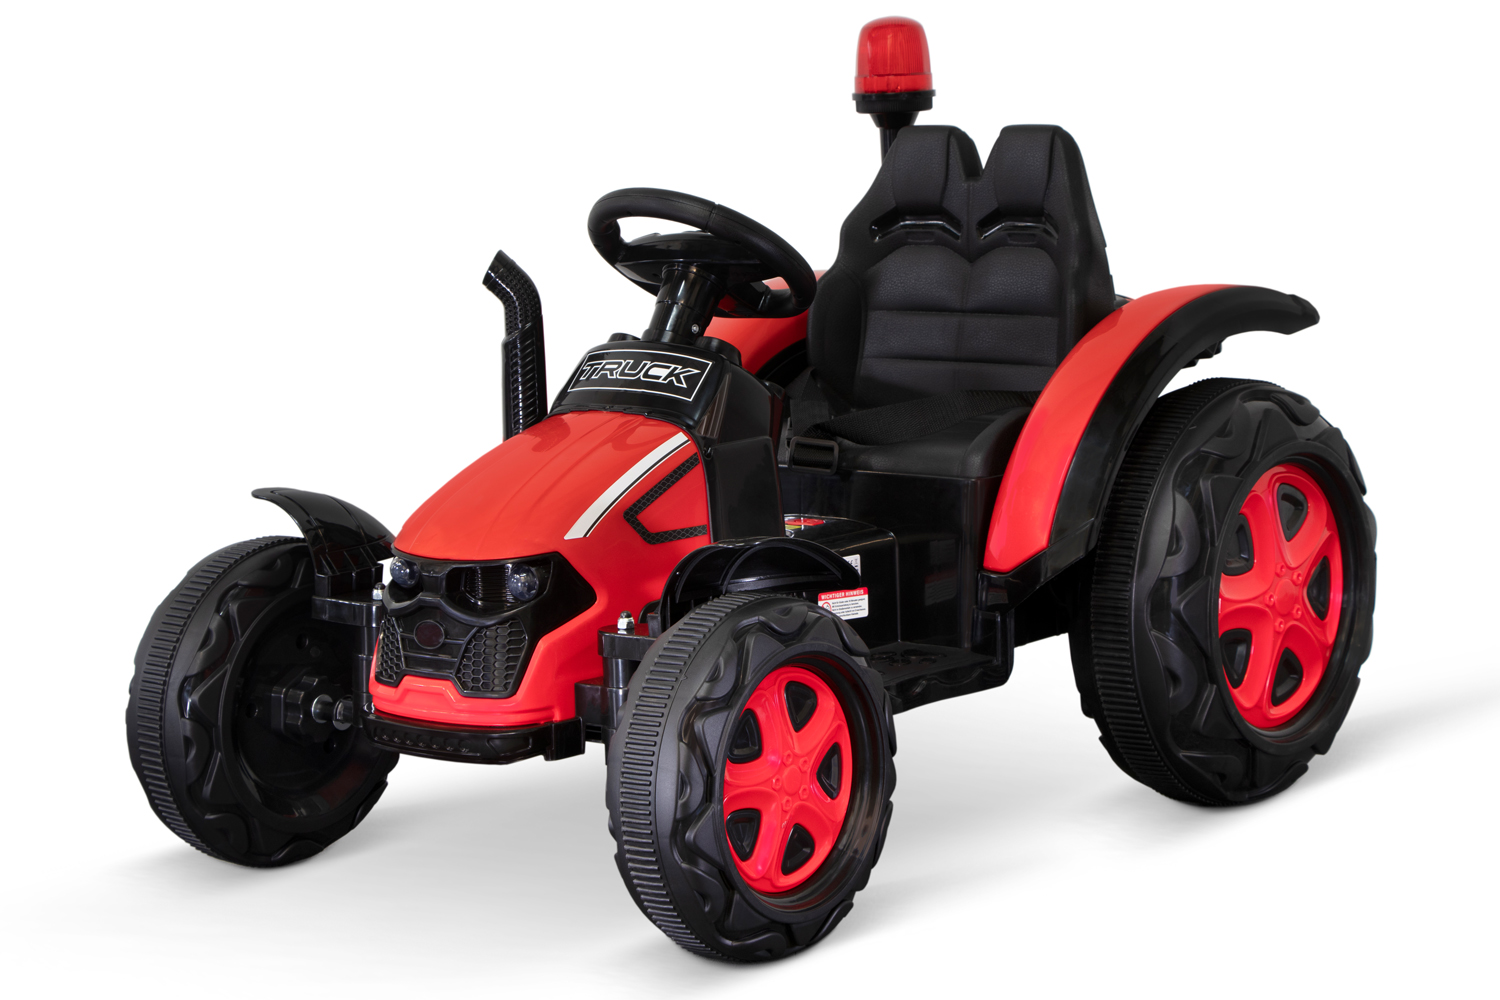 Kindertraktor - Traktor für Kinder mit 110ccm 4 Takt Motor + Anhänger